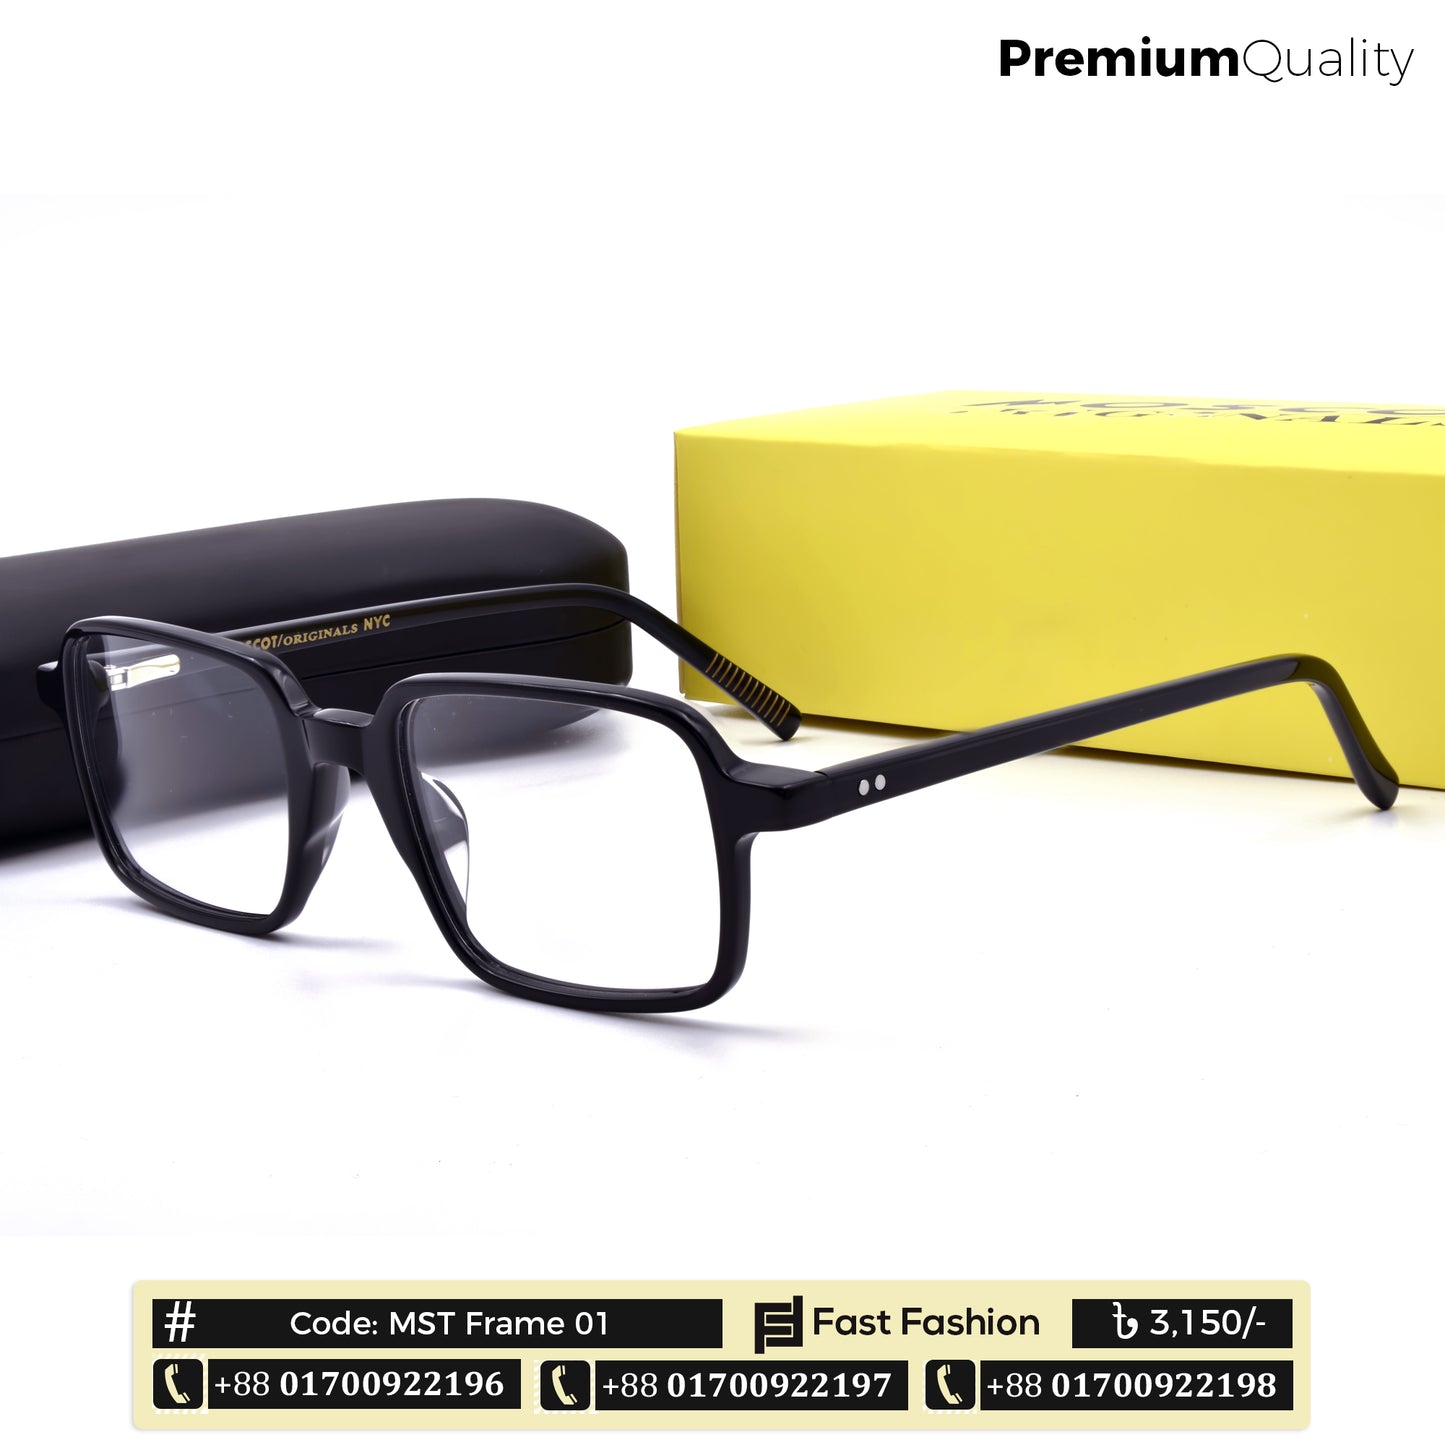 Luxury Modern Looking Trendy Stylish Optic Frame | MST Frame 01